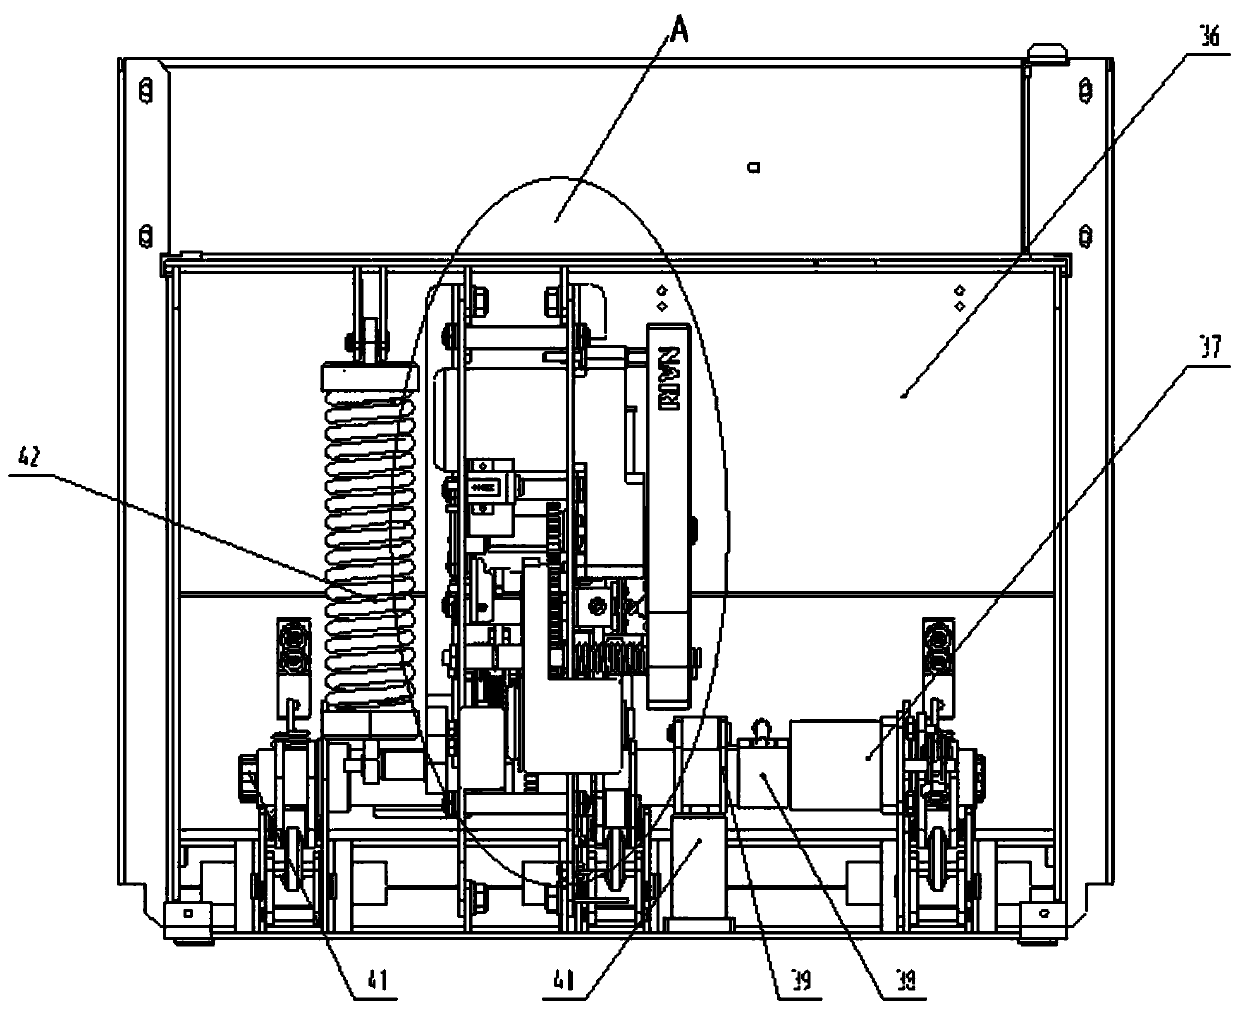 A spring operating mechanism of a modular vacuum circuit breaker